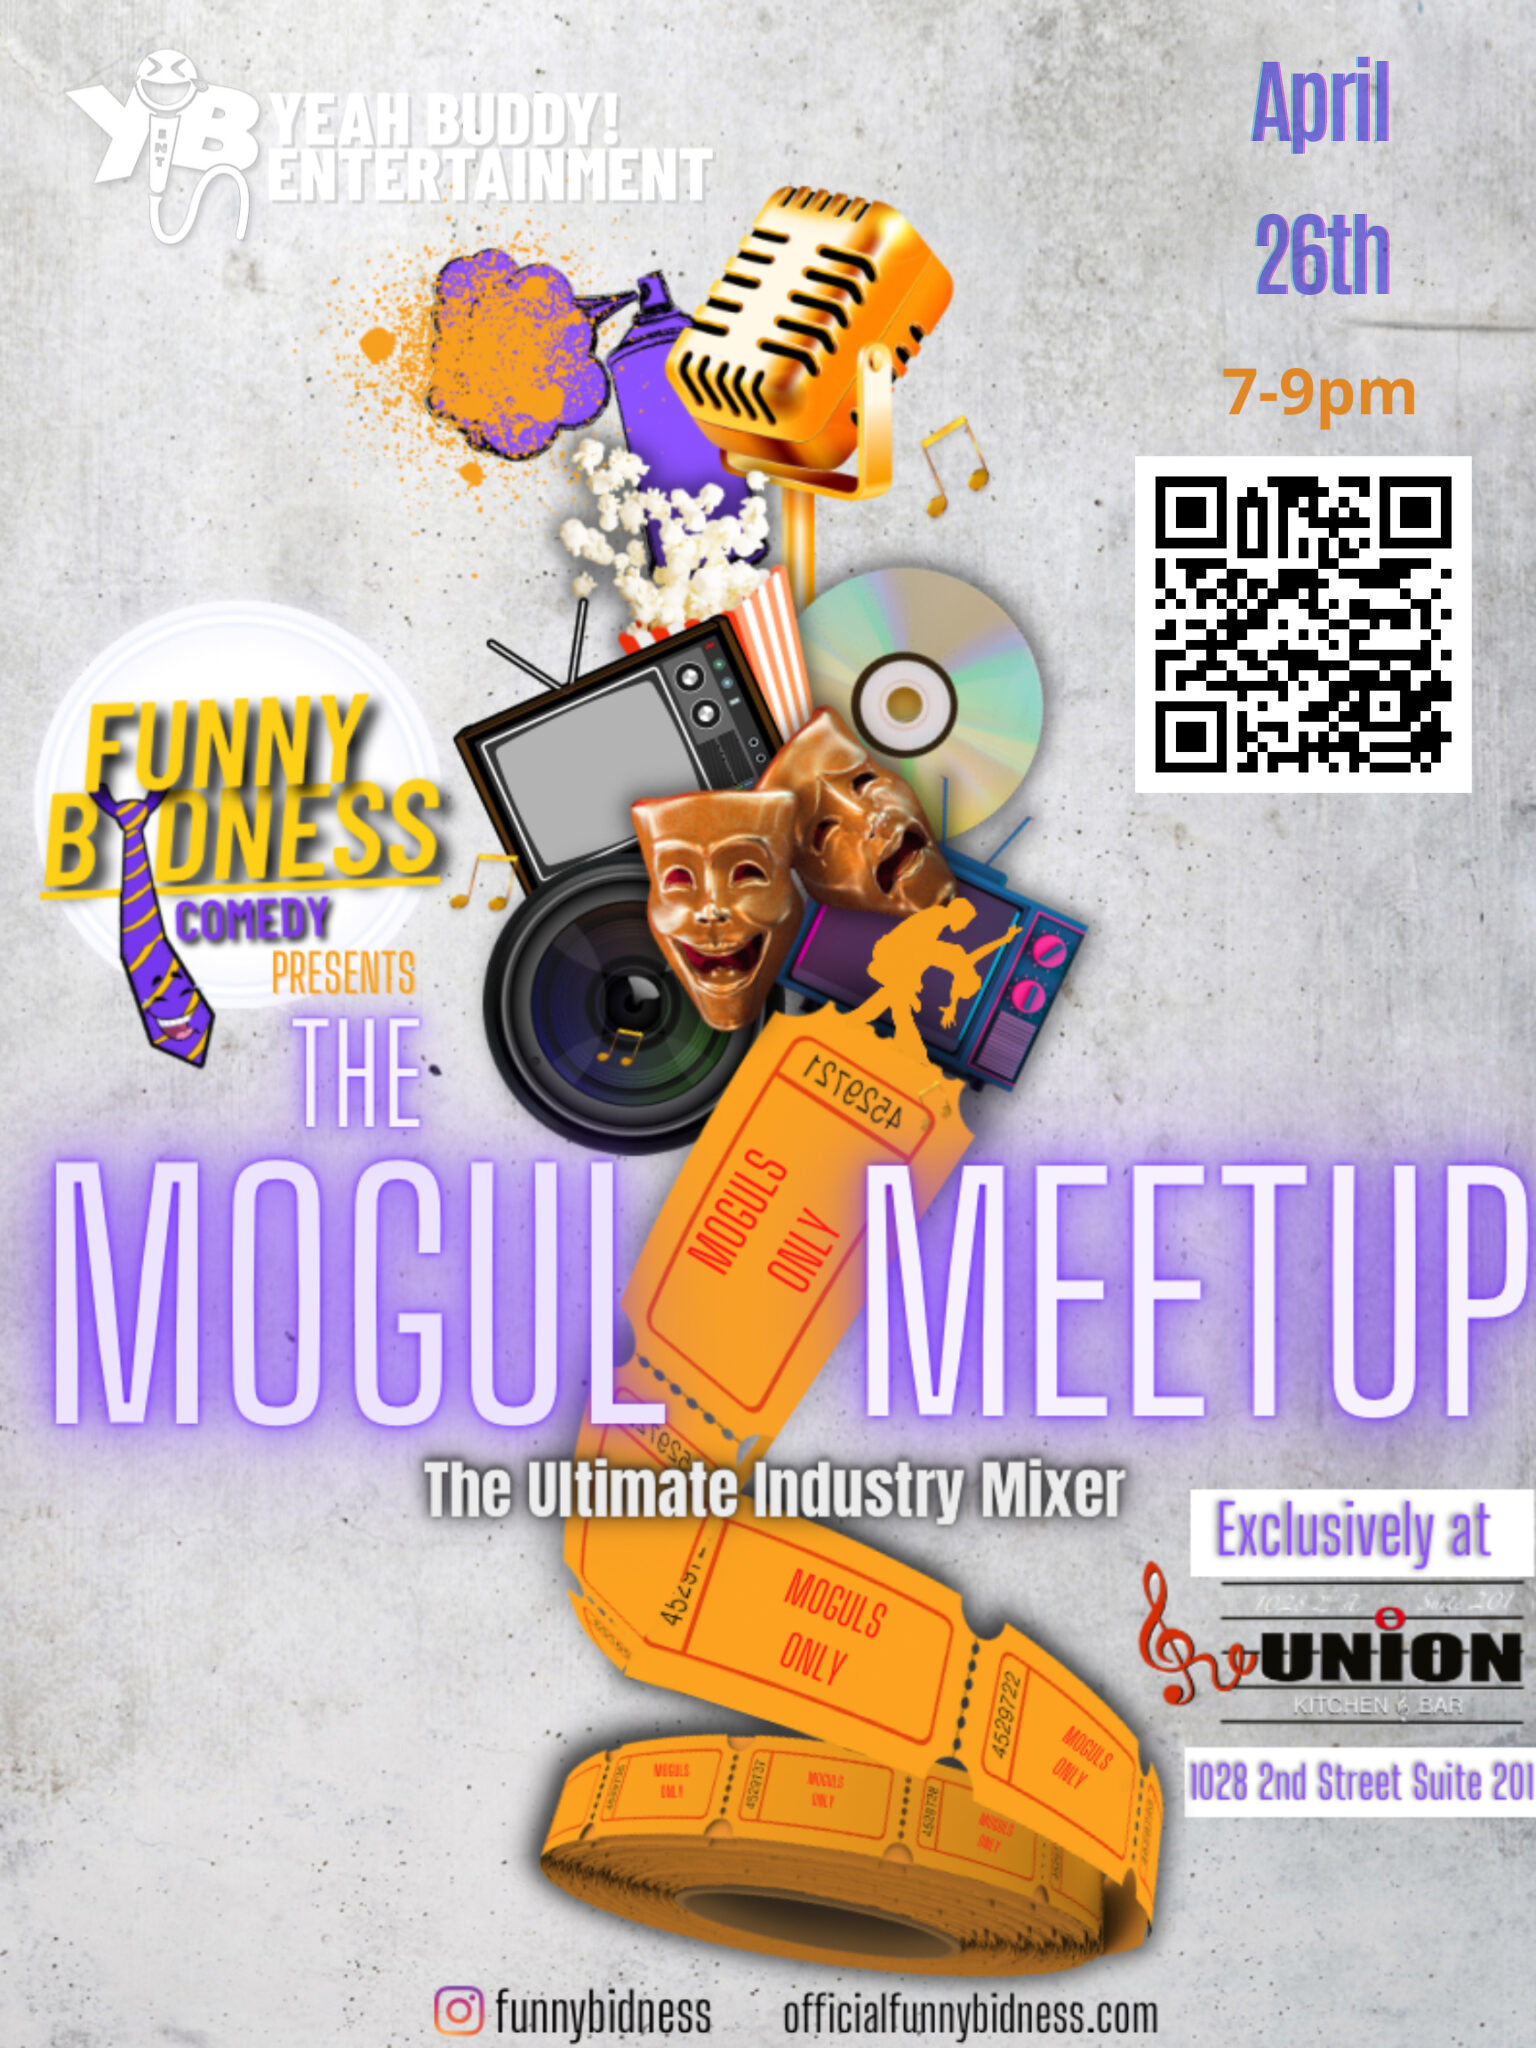 The Mogul Meet Up – Apr 26th